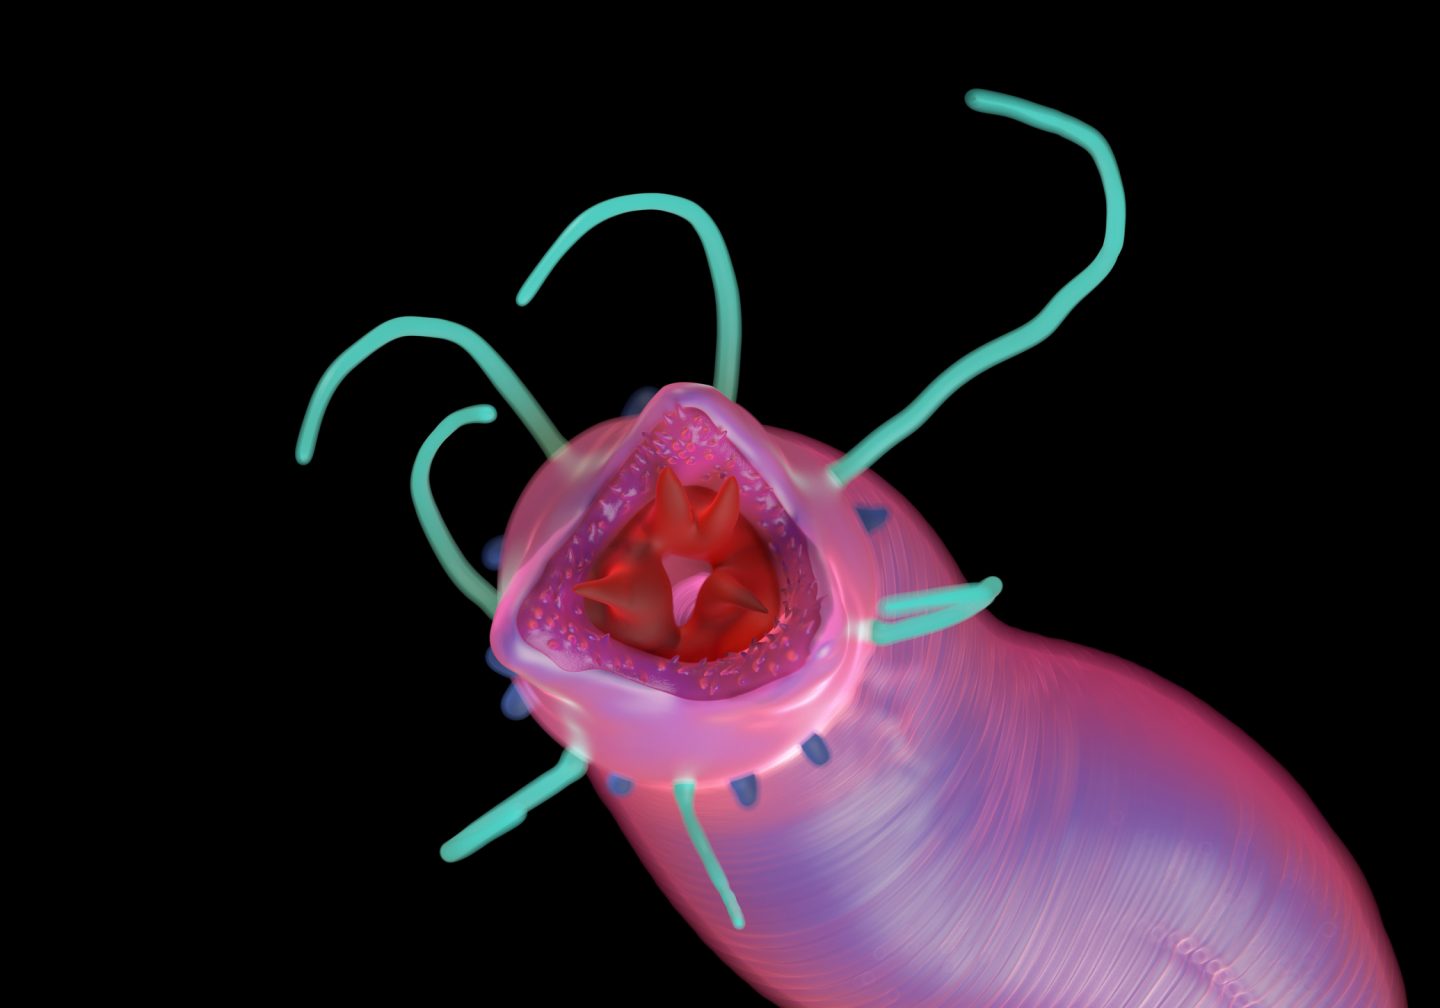 roundworm parasite